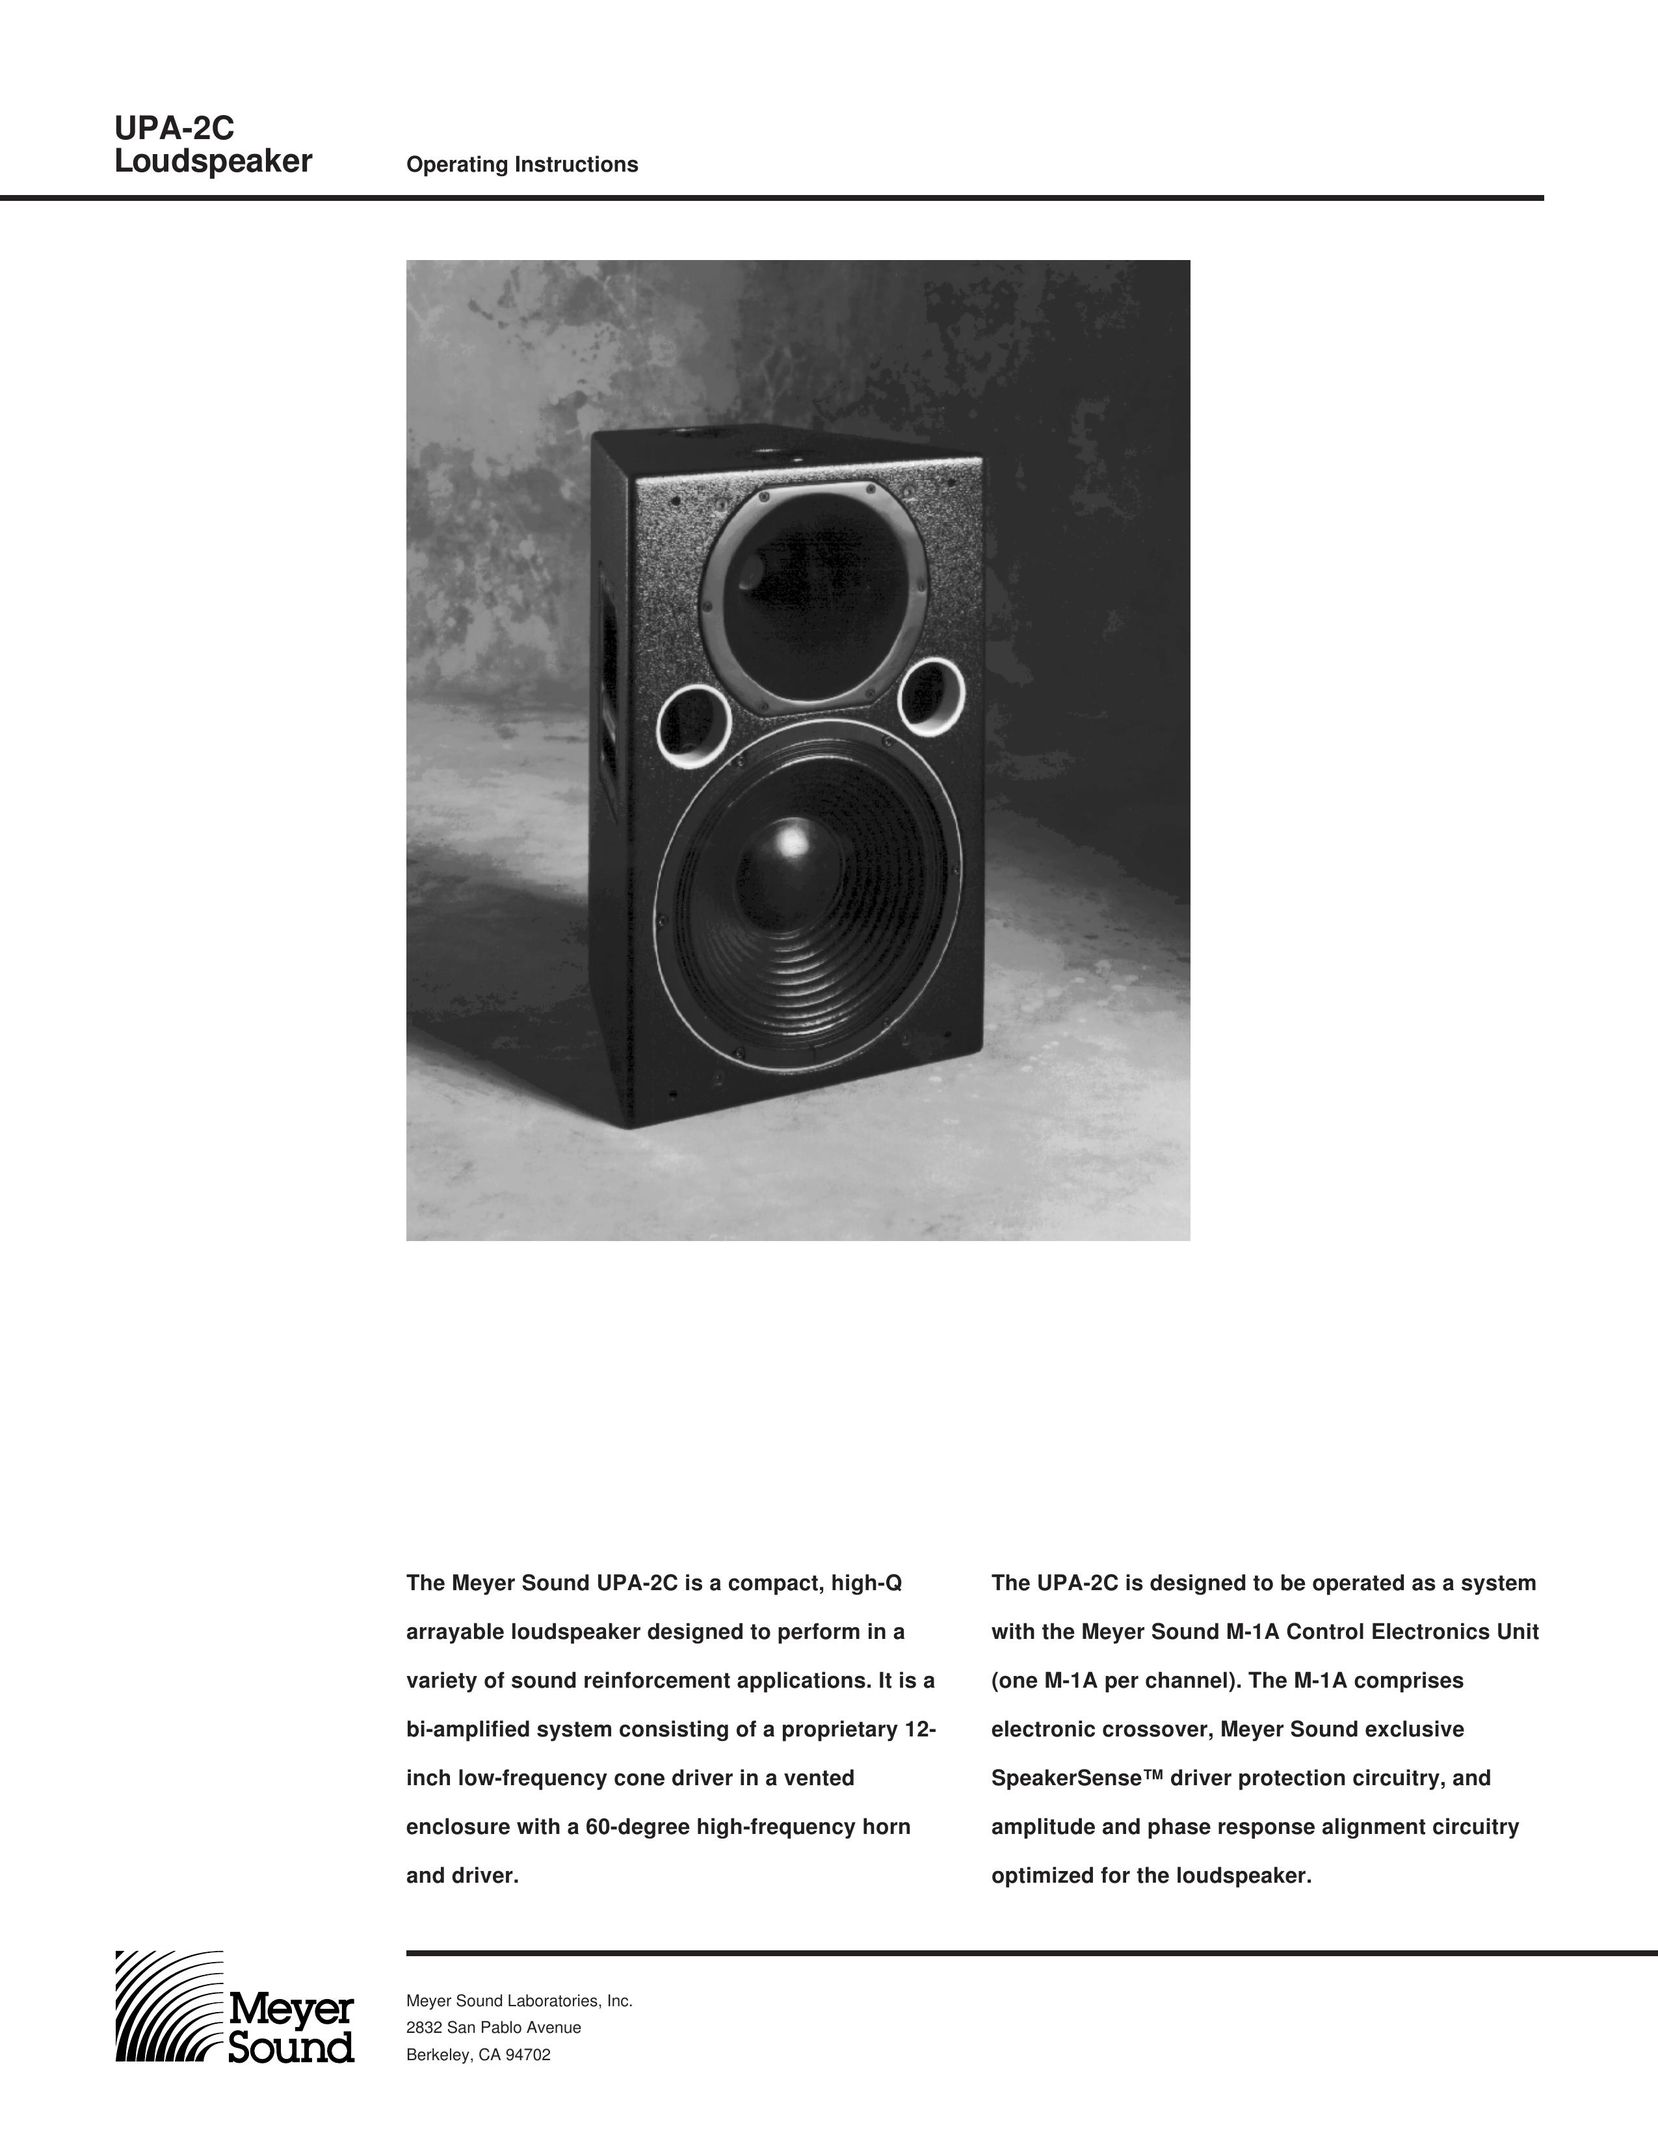 Meyer Sound UPA-2C Portable Speaker User Manual